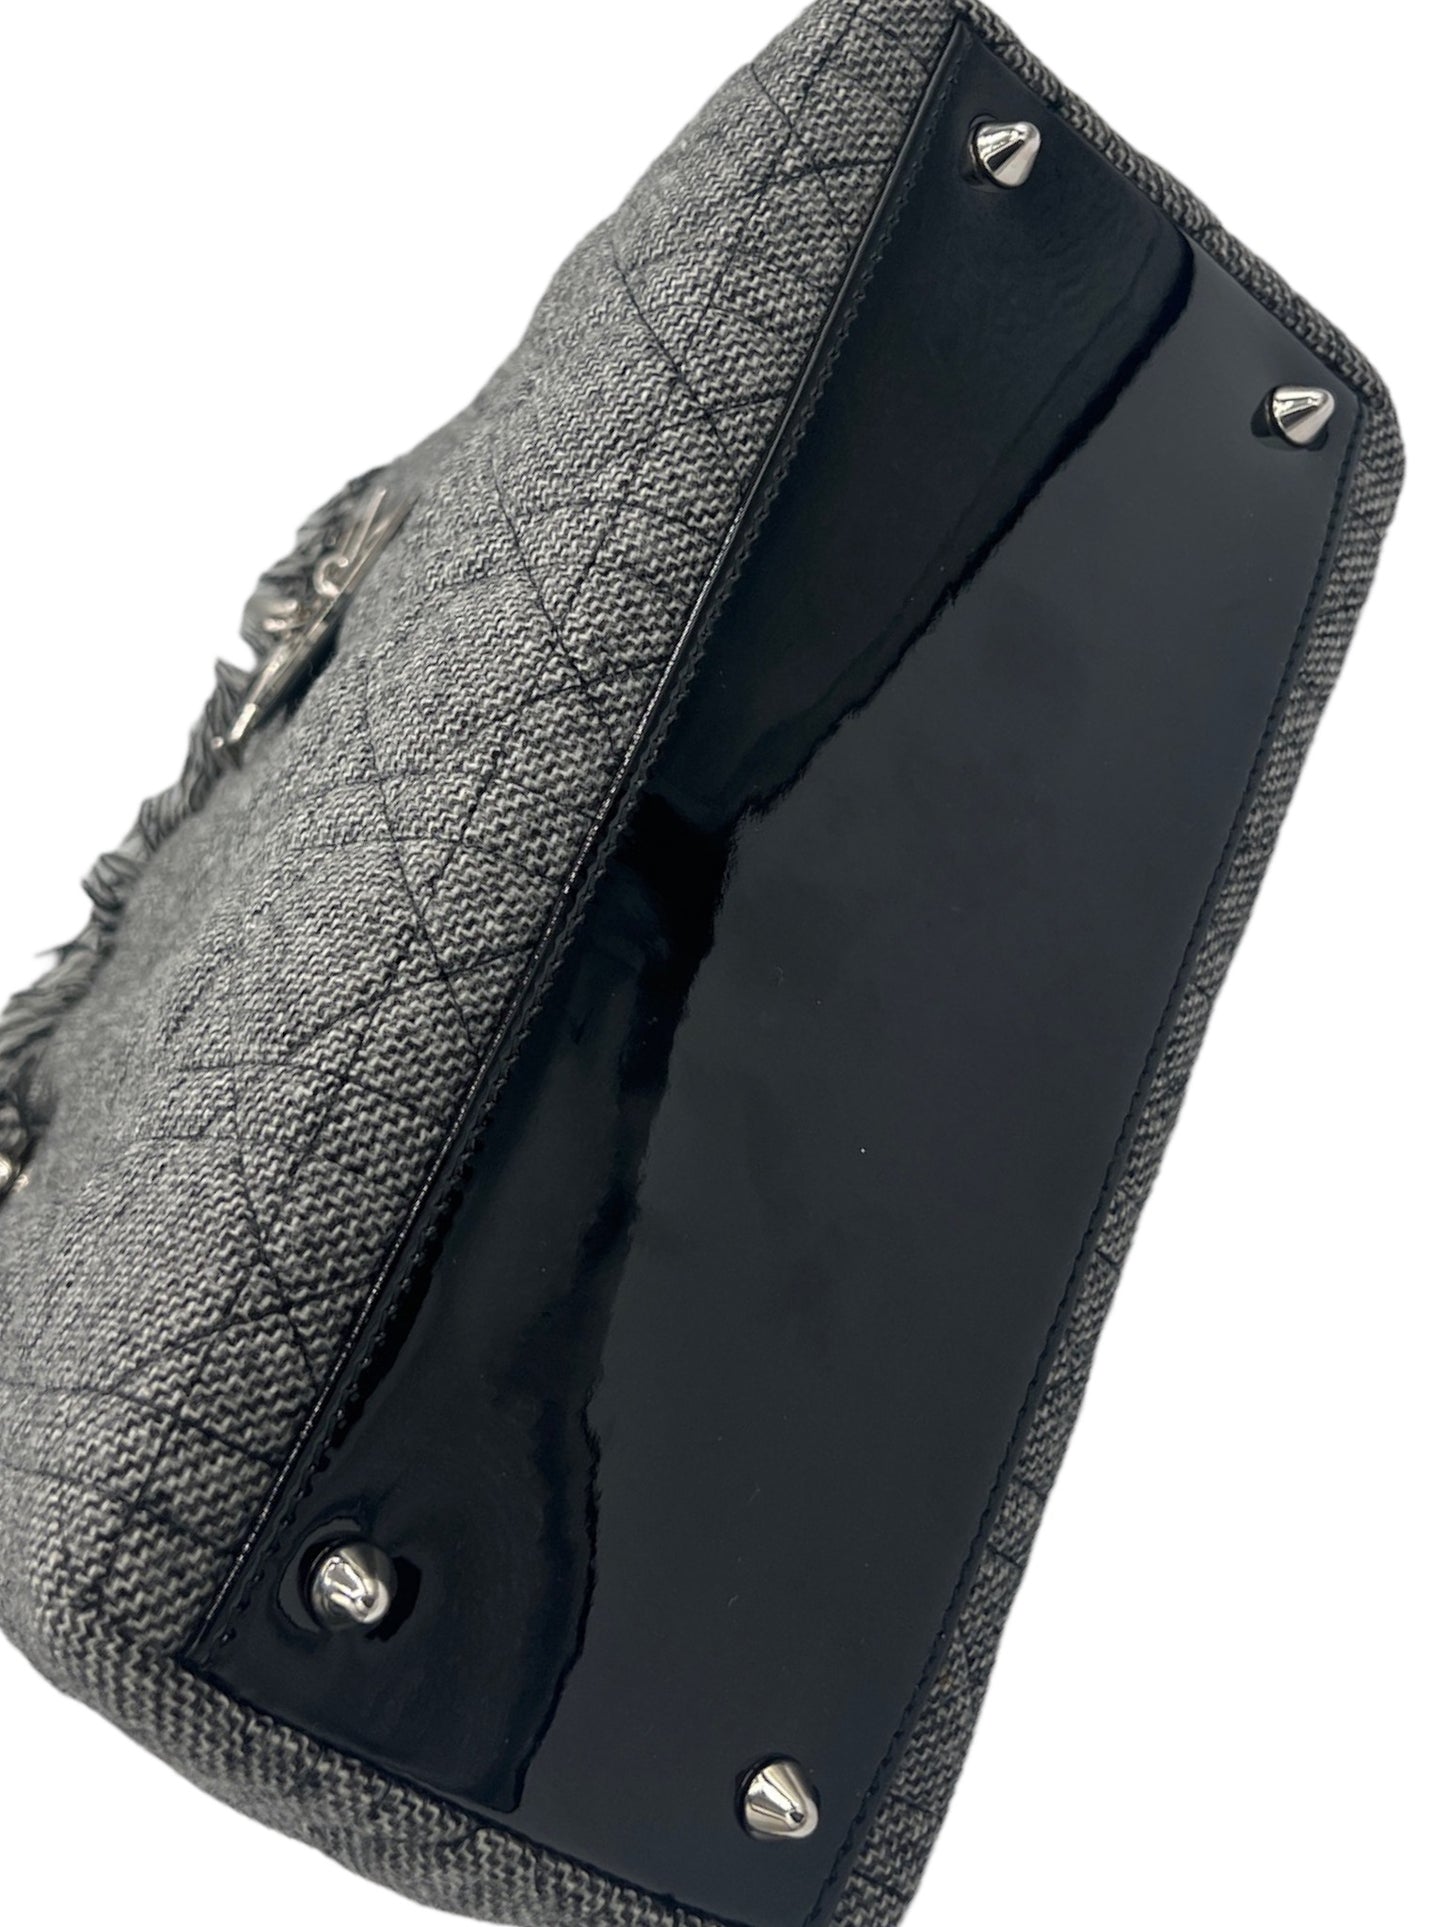 DIOR - Lady Dior Wool Patent Leather Medium Bag Handbag